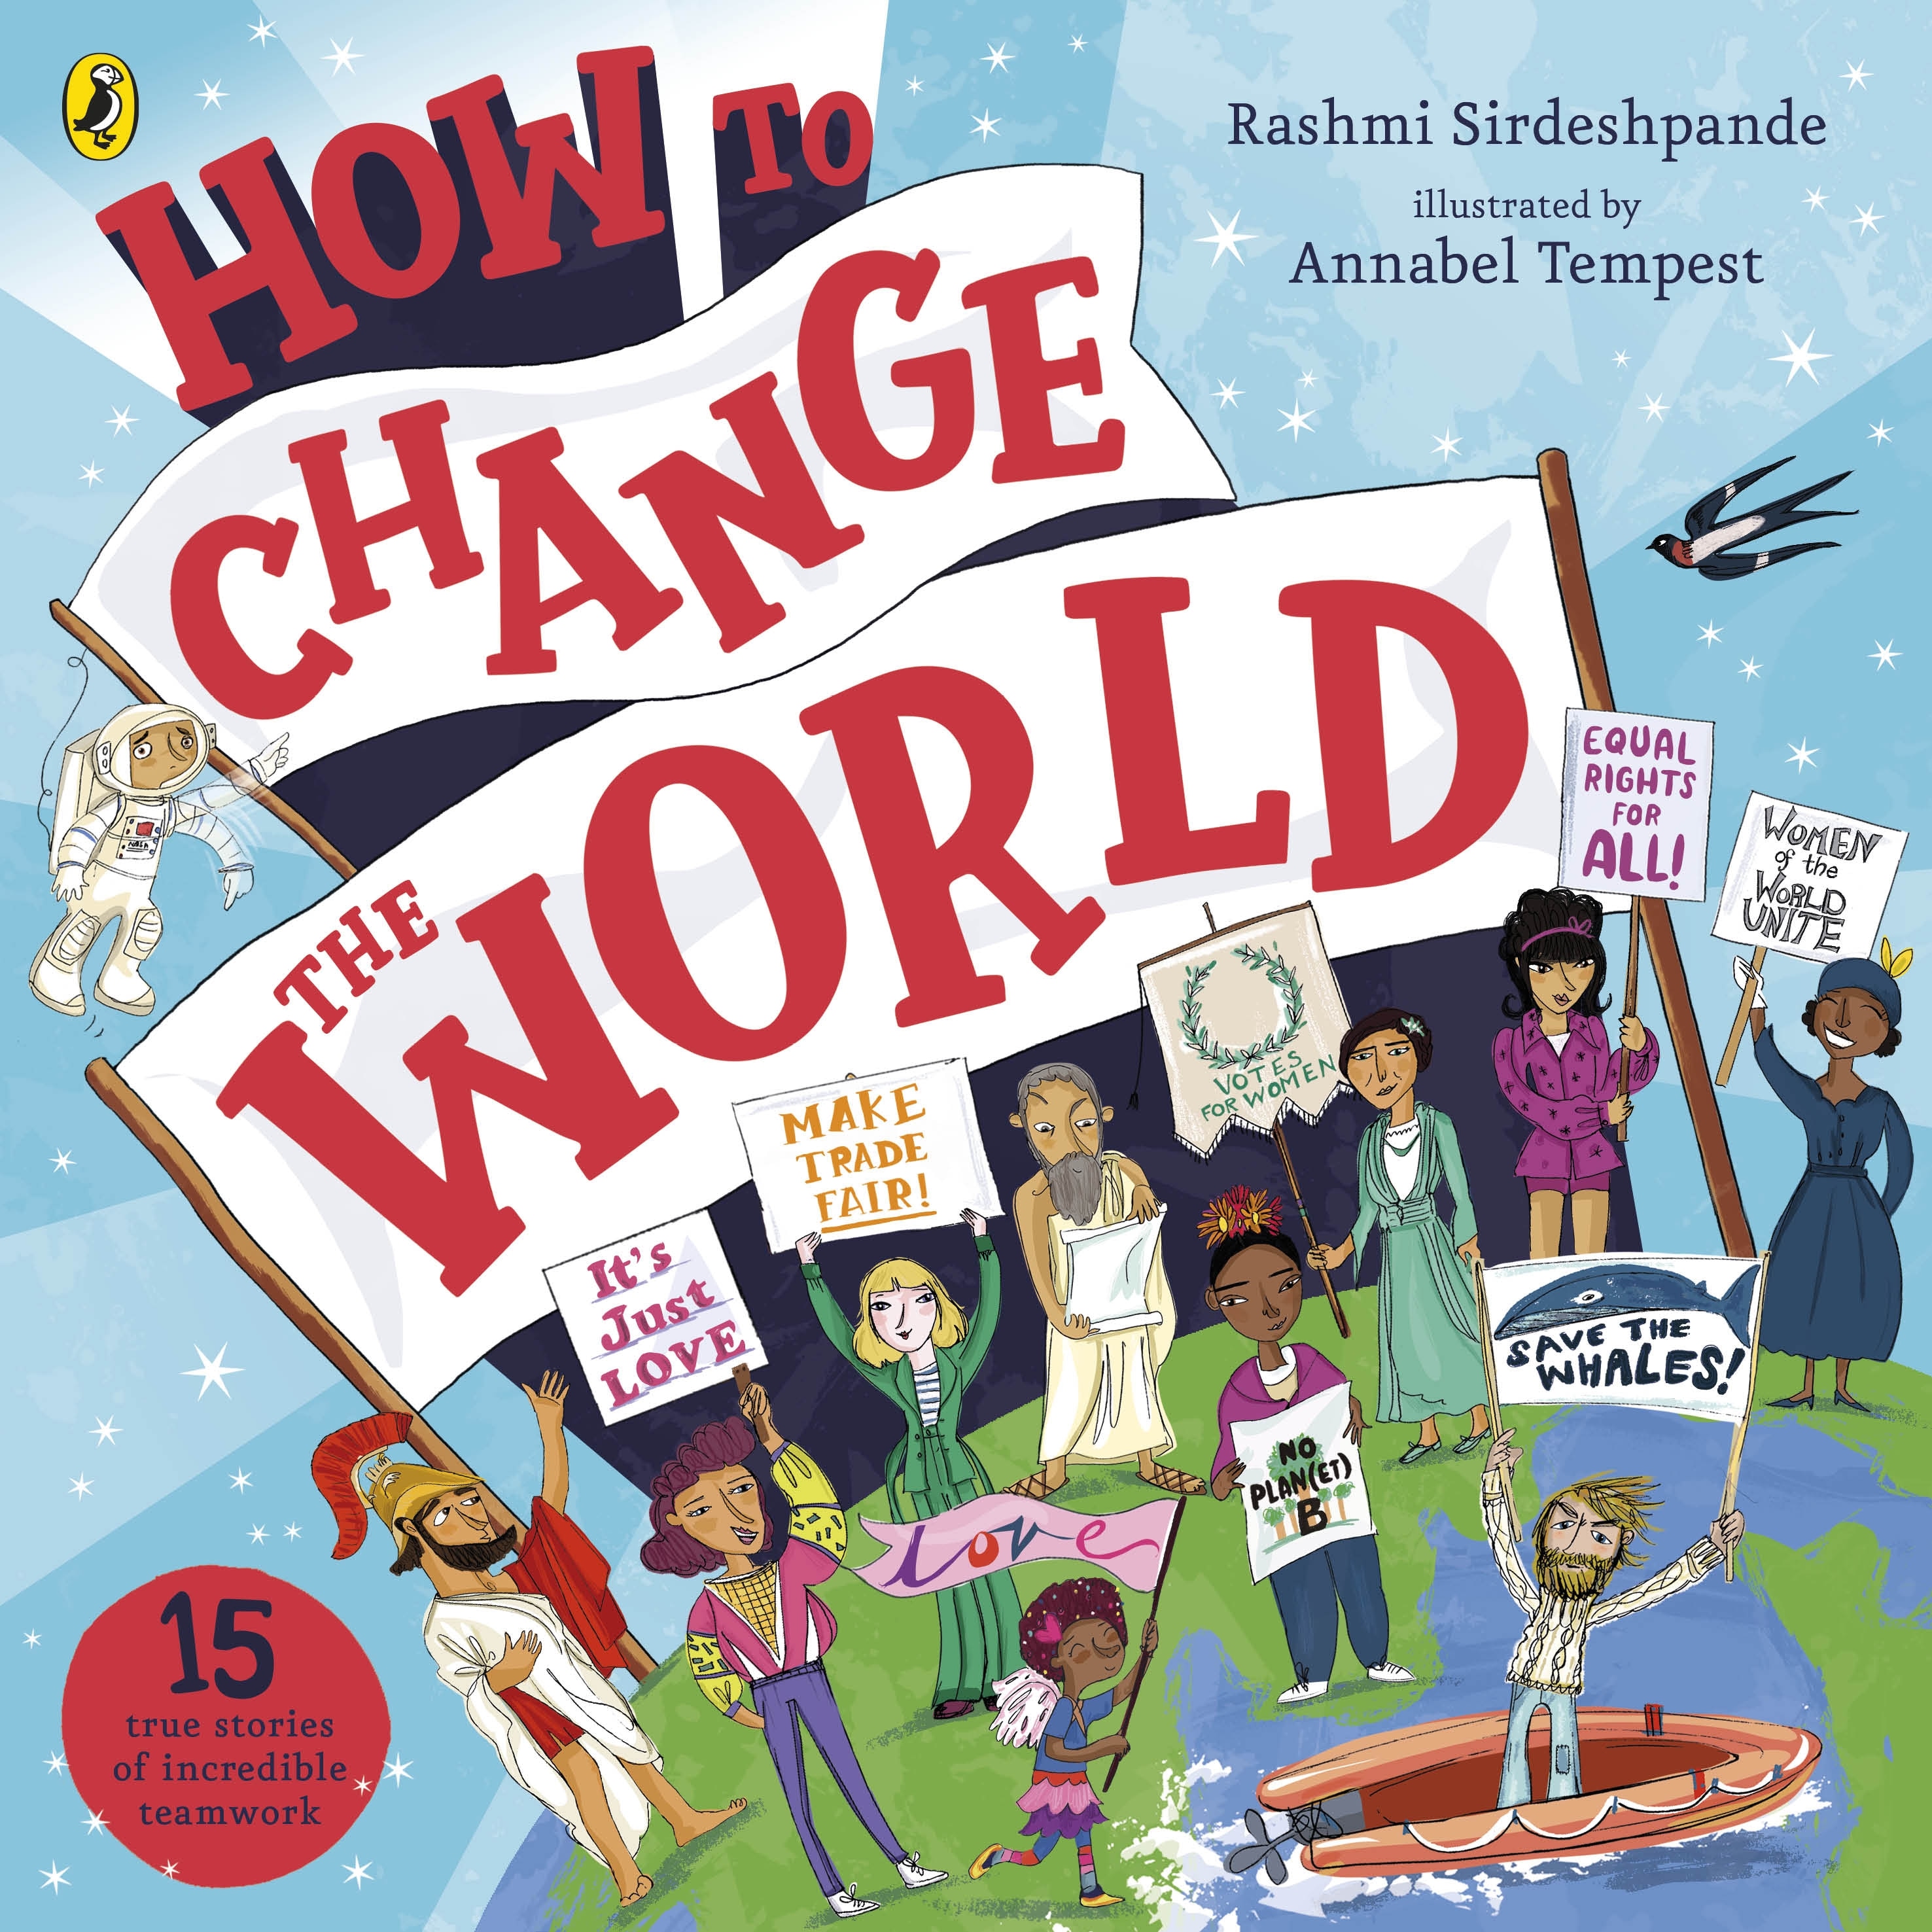 Book “How To Change The World” by Rashmi Sirdeshpande — January 7, 2021